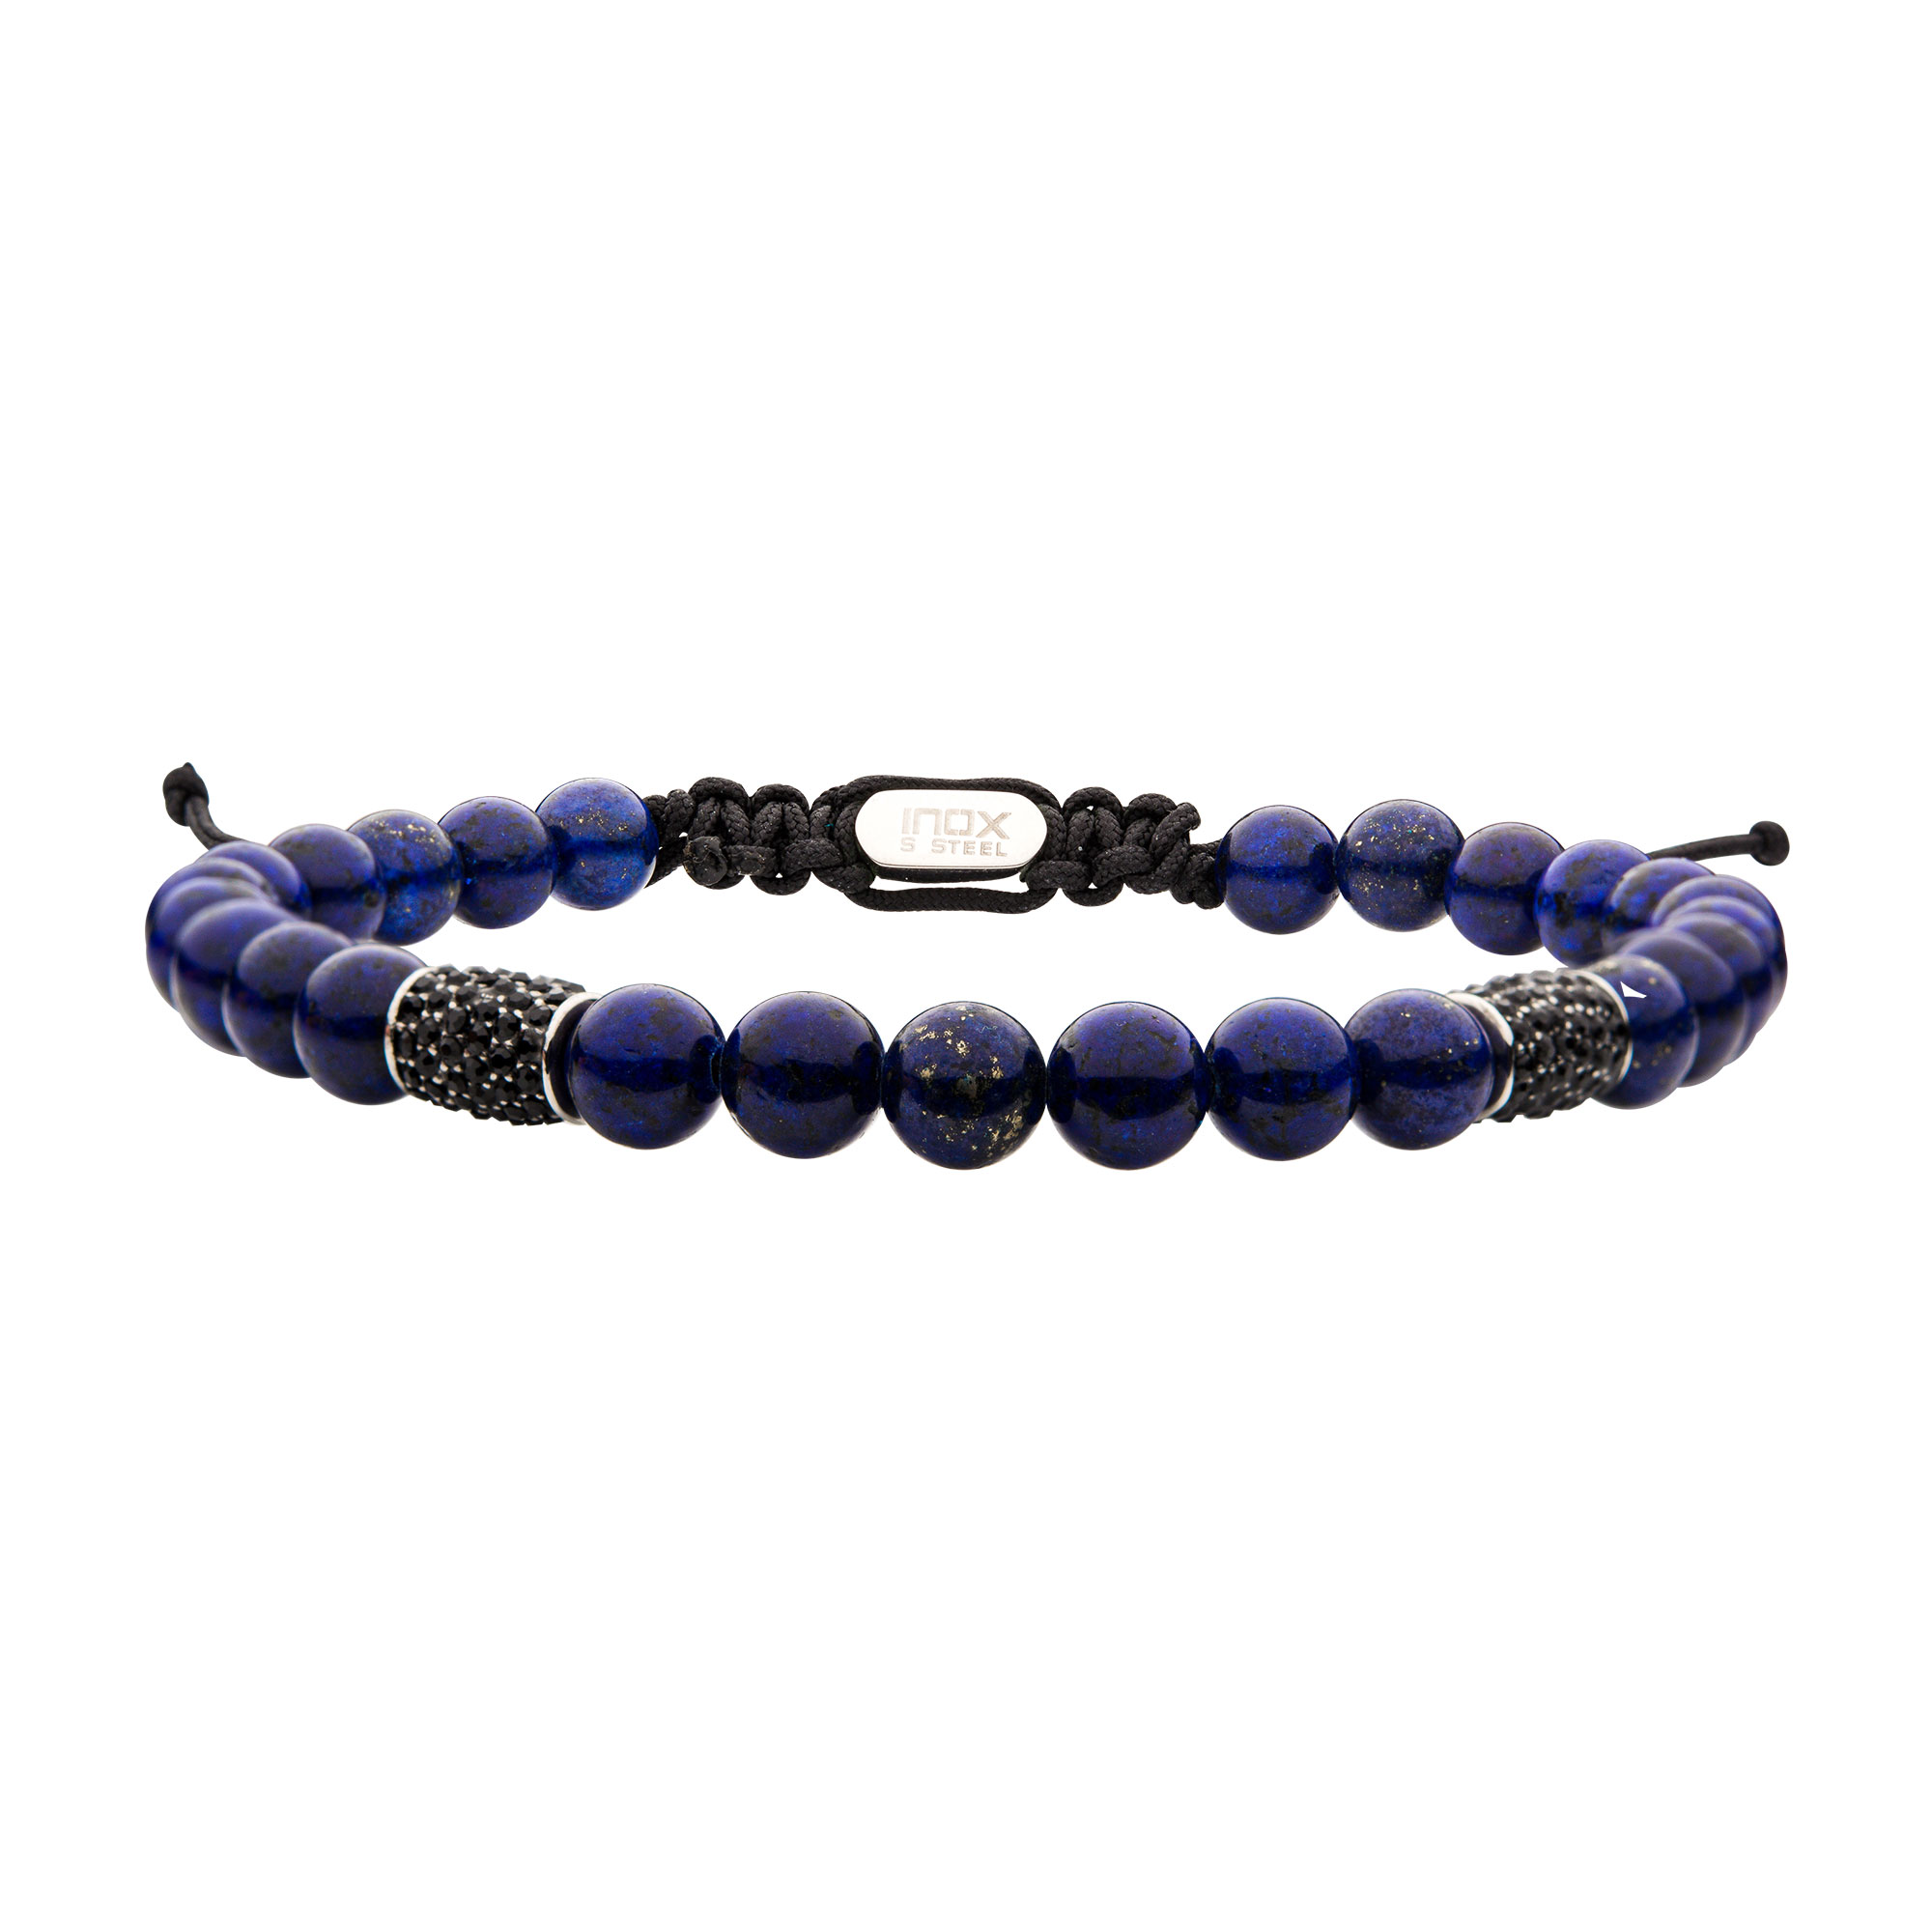 Stainless Steel Beads with Black CZ & Lapis Stone Bead Adjustable Non-Braided Bracelet Glatz Jewelry Aliquippa, PA